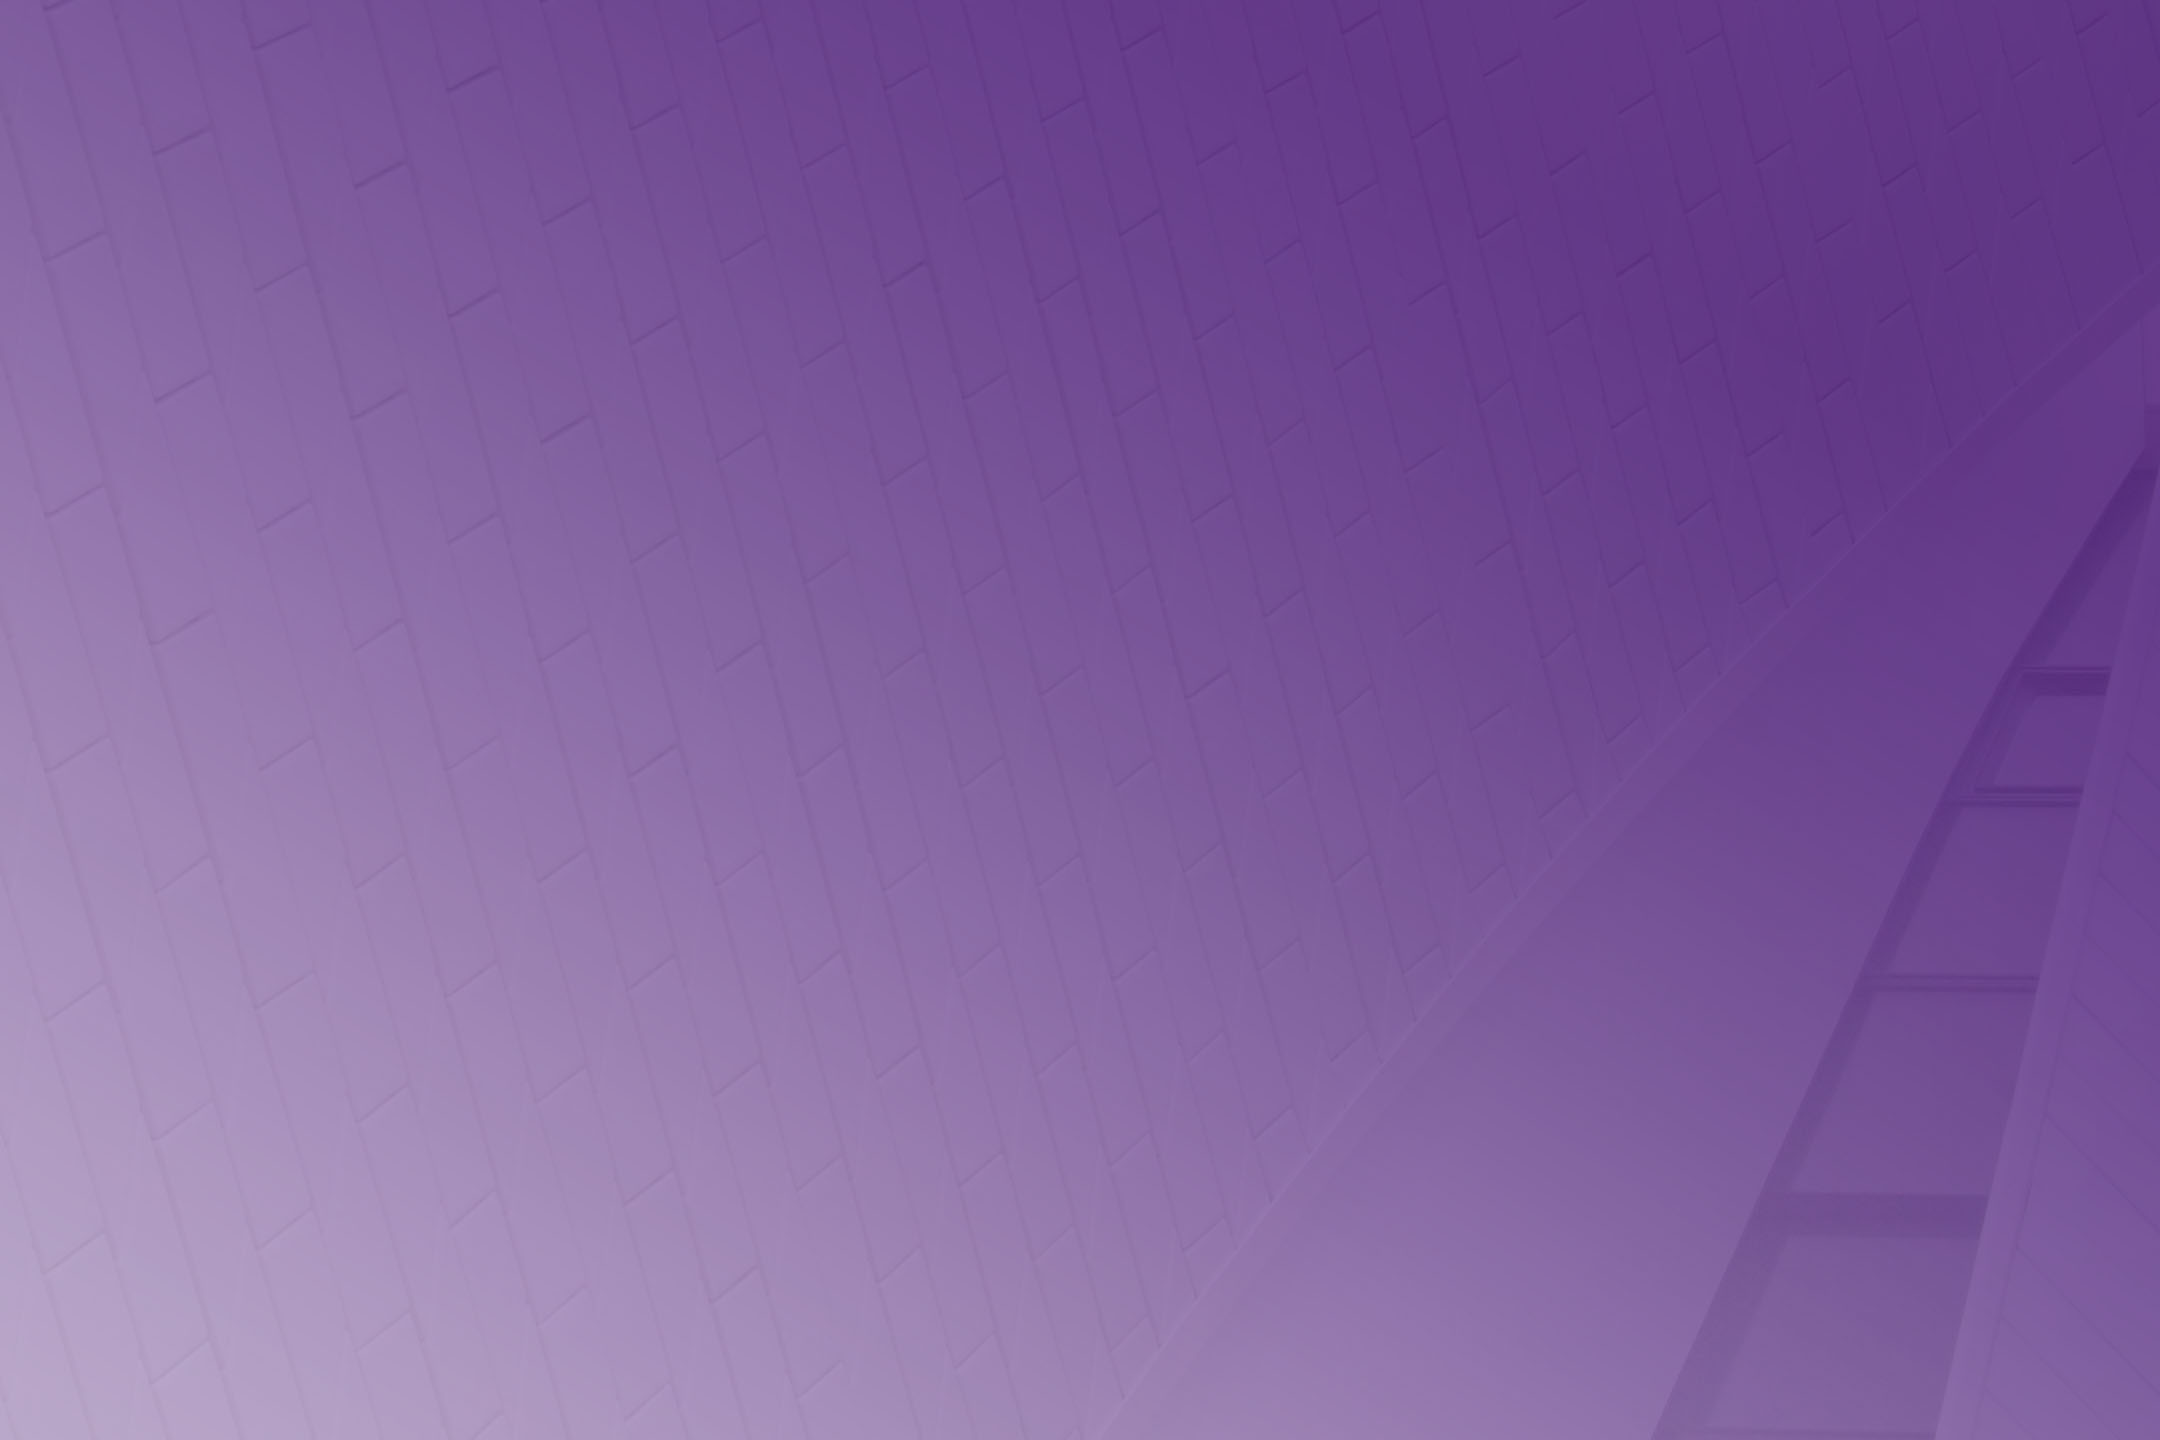 decorative purple background